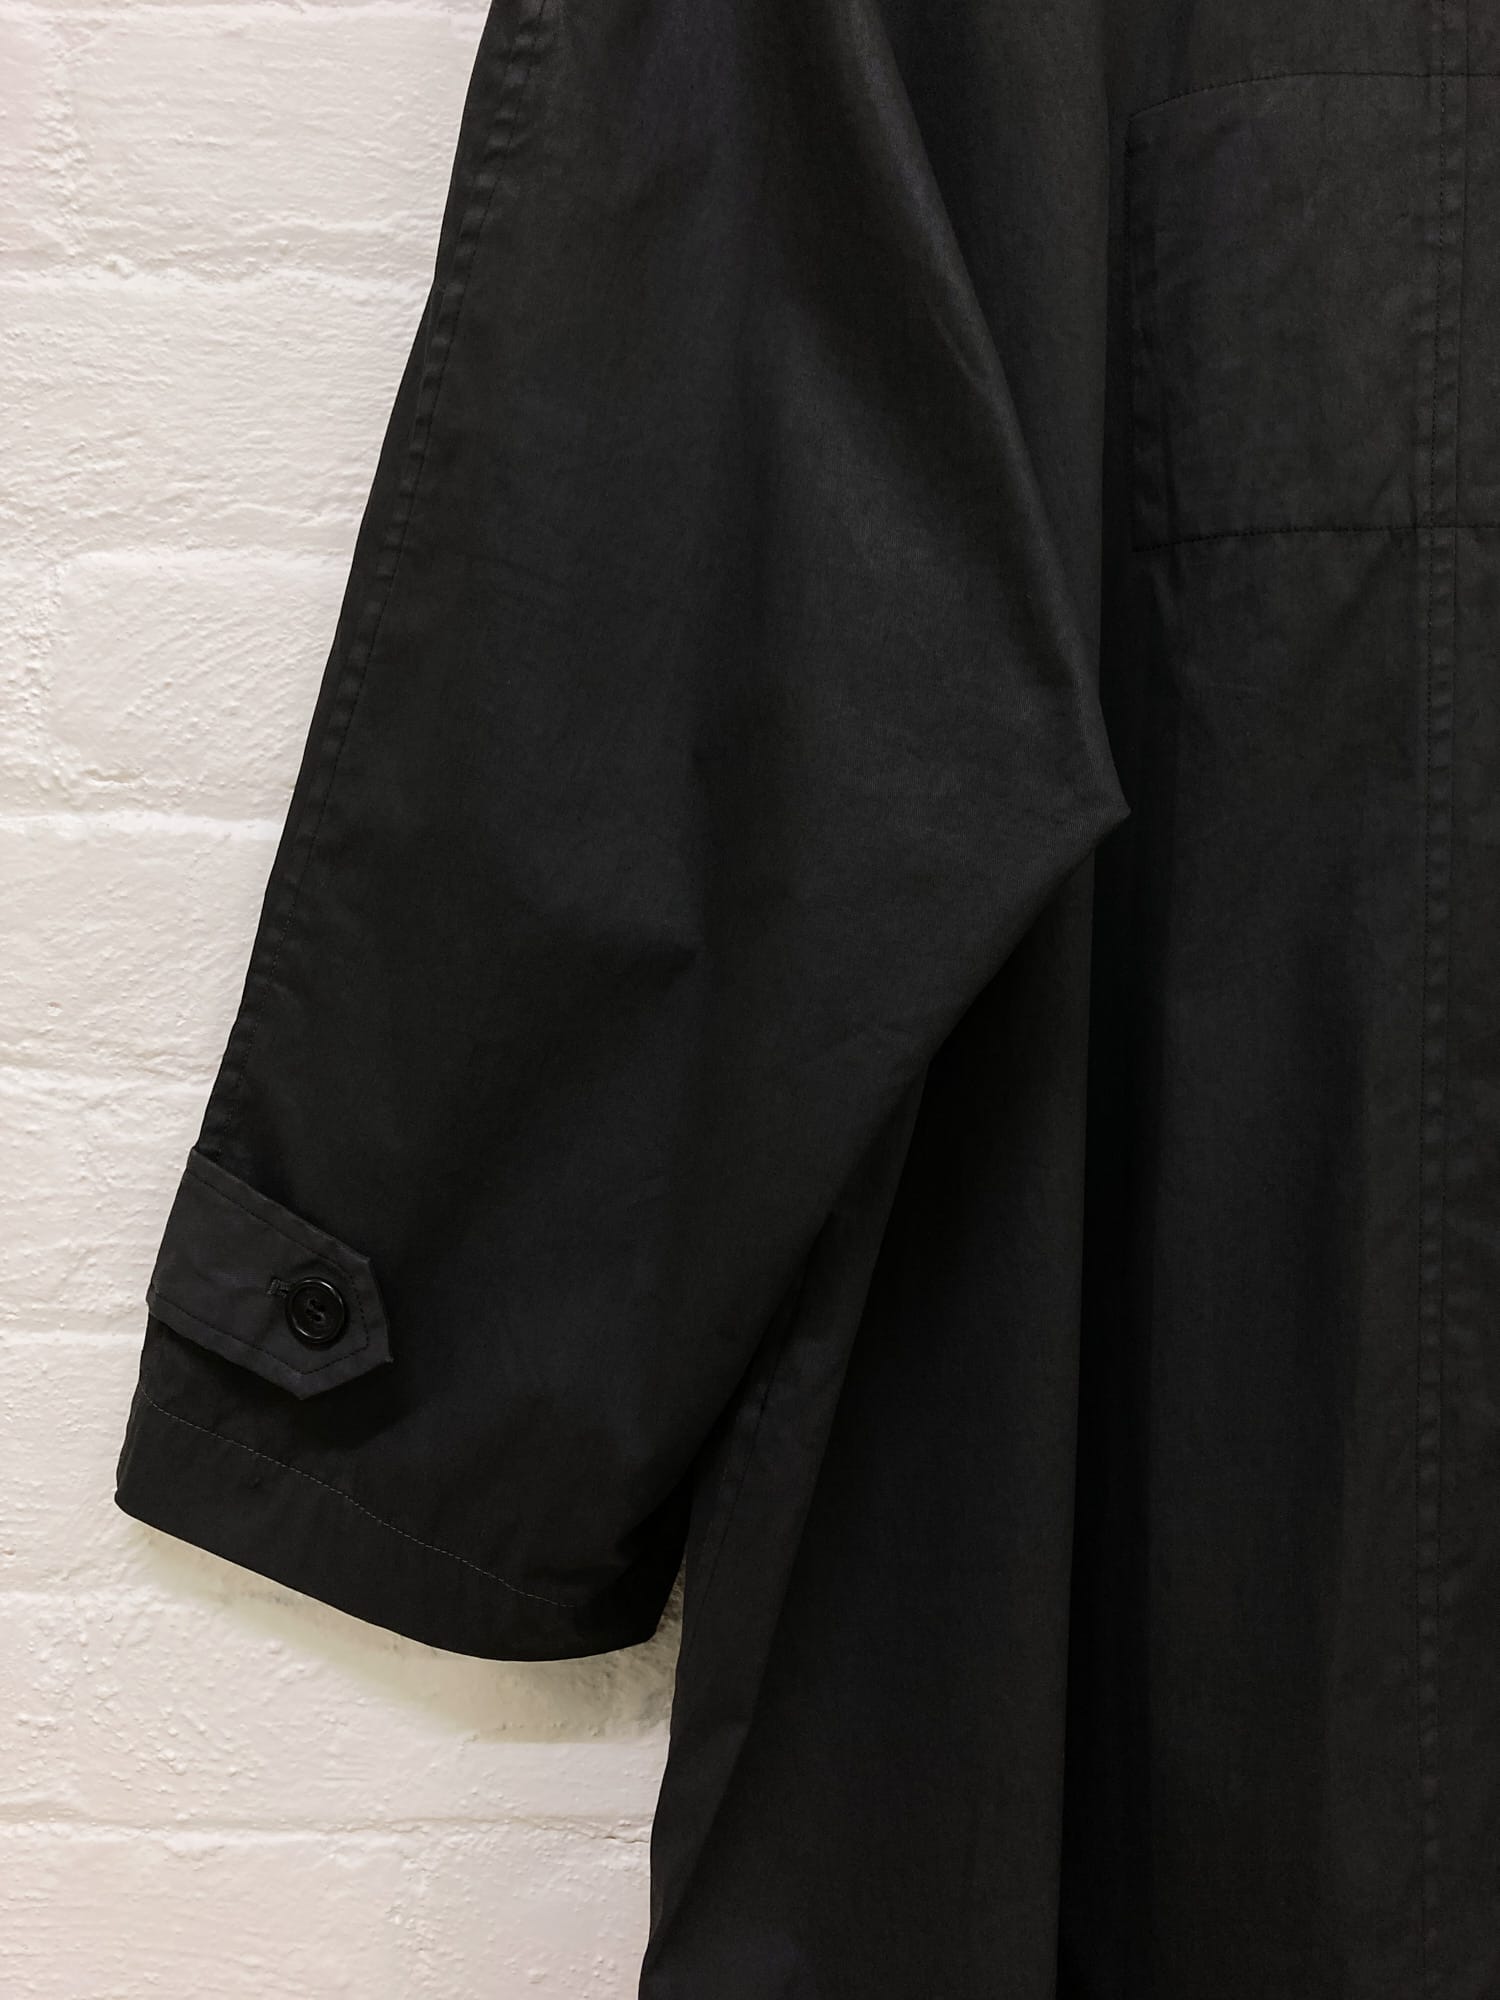 Odds On by Akira Onozuka Zucca 1987-1988 dark grey coated cotton rectangle coat